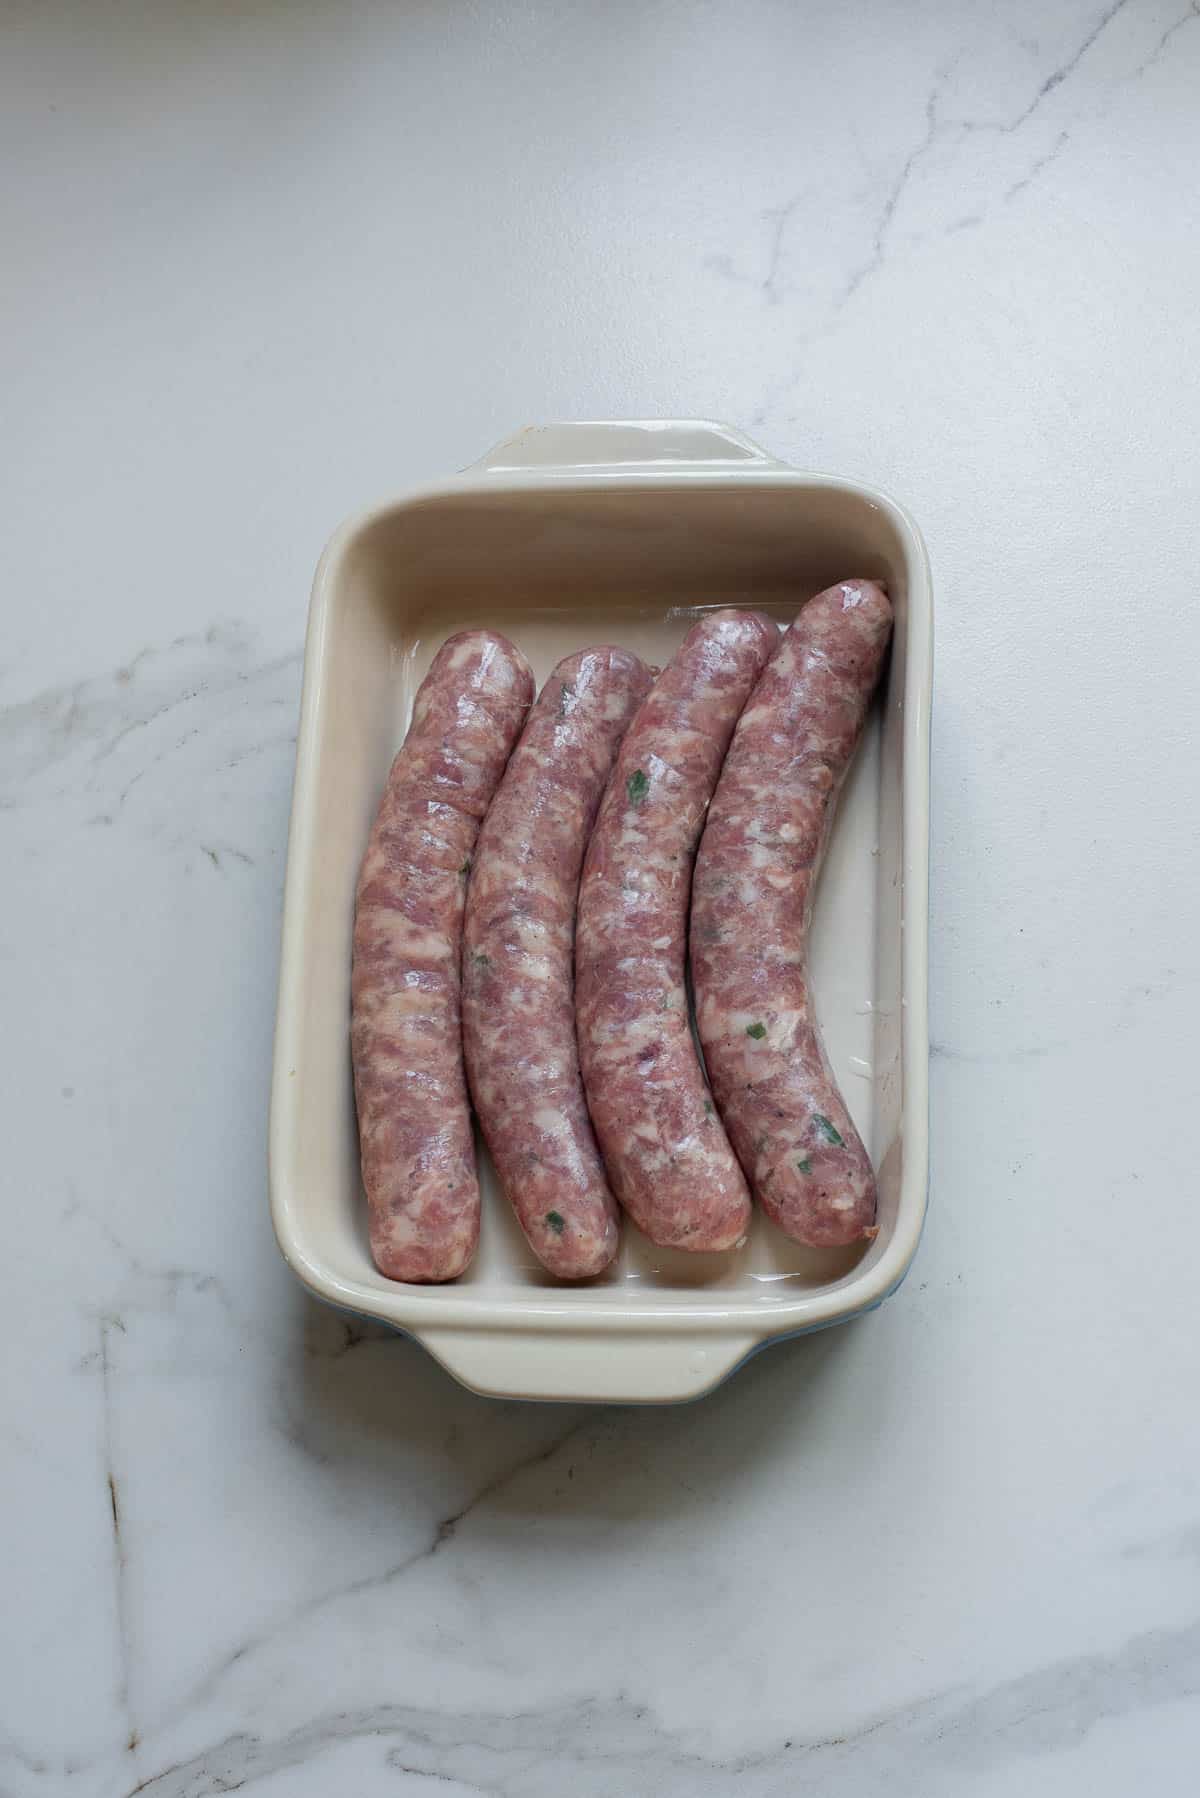 Raw sausage in a casserole dish.